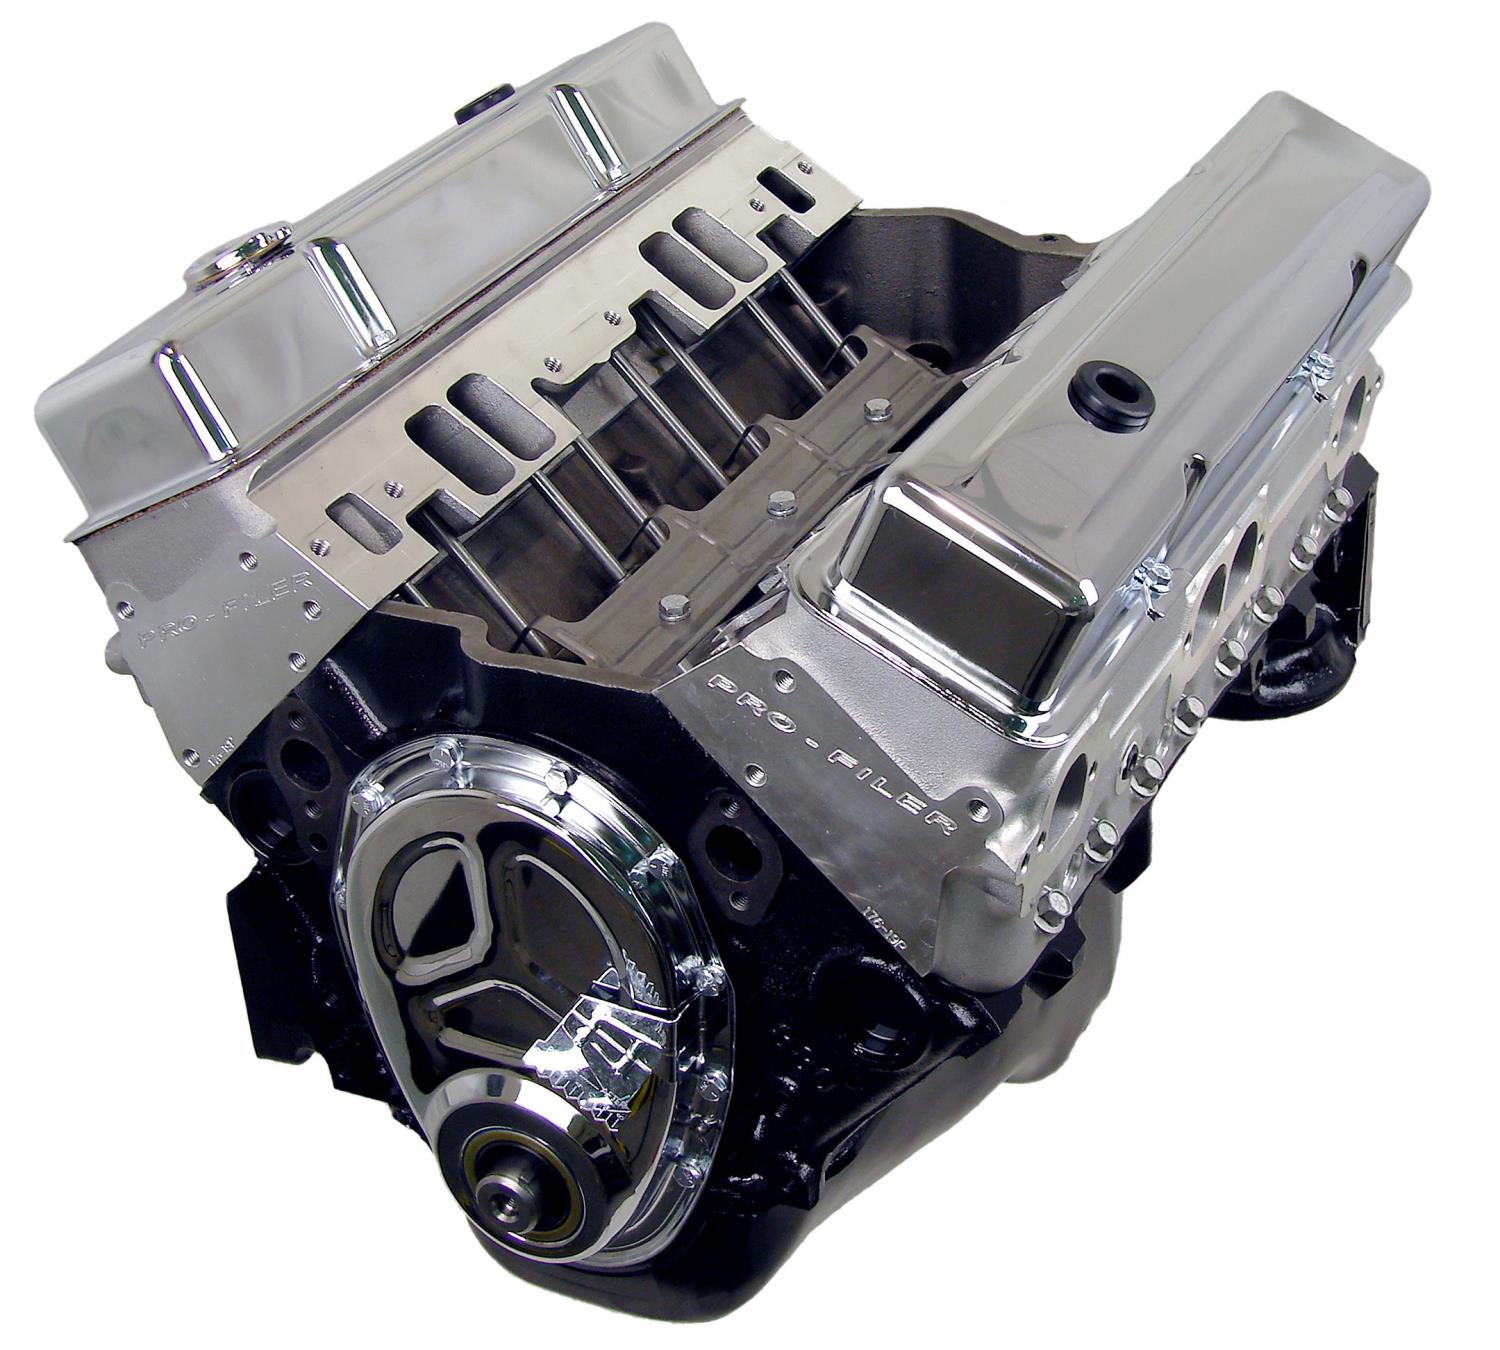 HP89 High Performance Crate Engine Small Block Chevy 350ci / 390HP / 420TQ